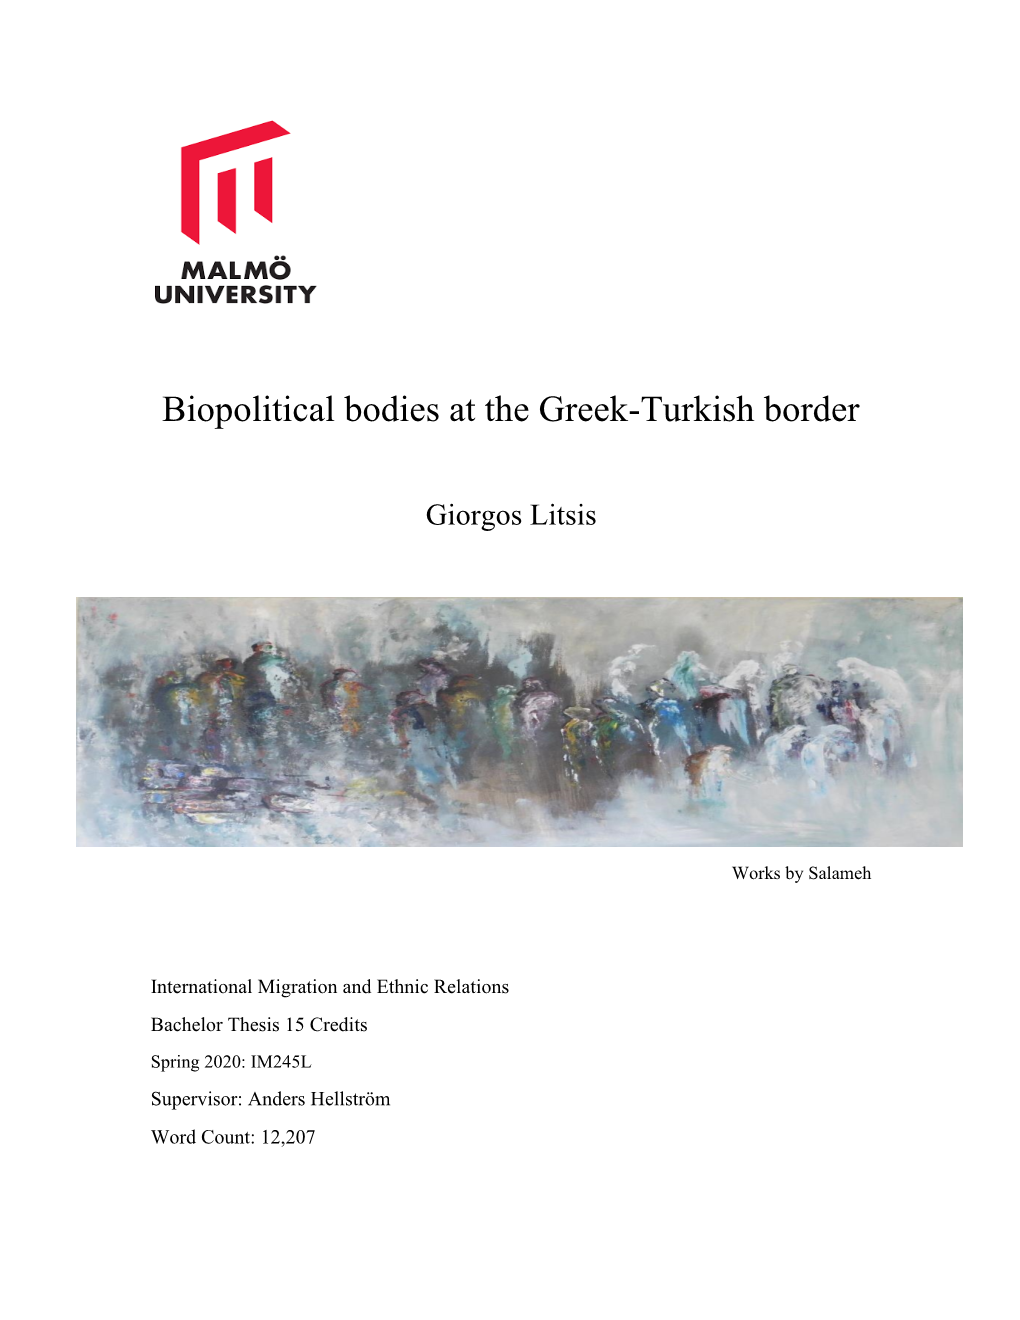 Biopolitical Bodies at the Greek-Turkish Border